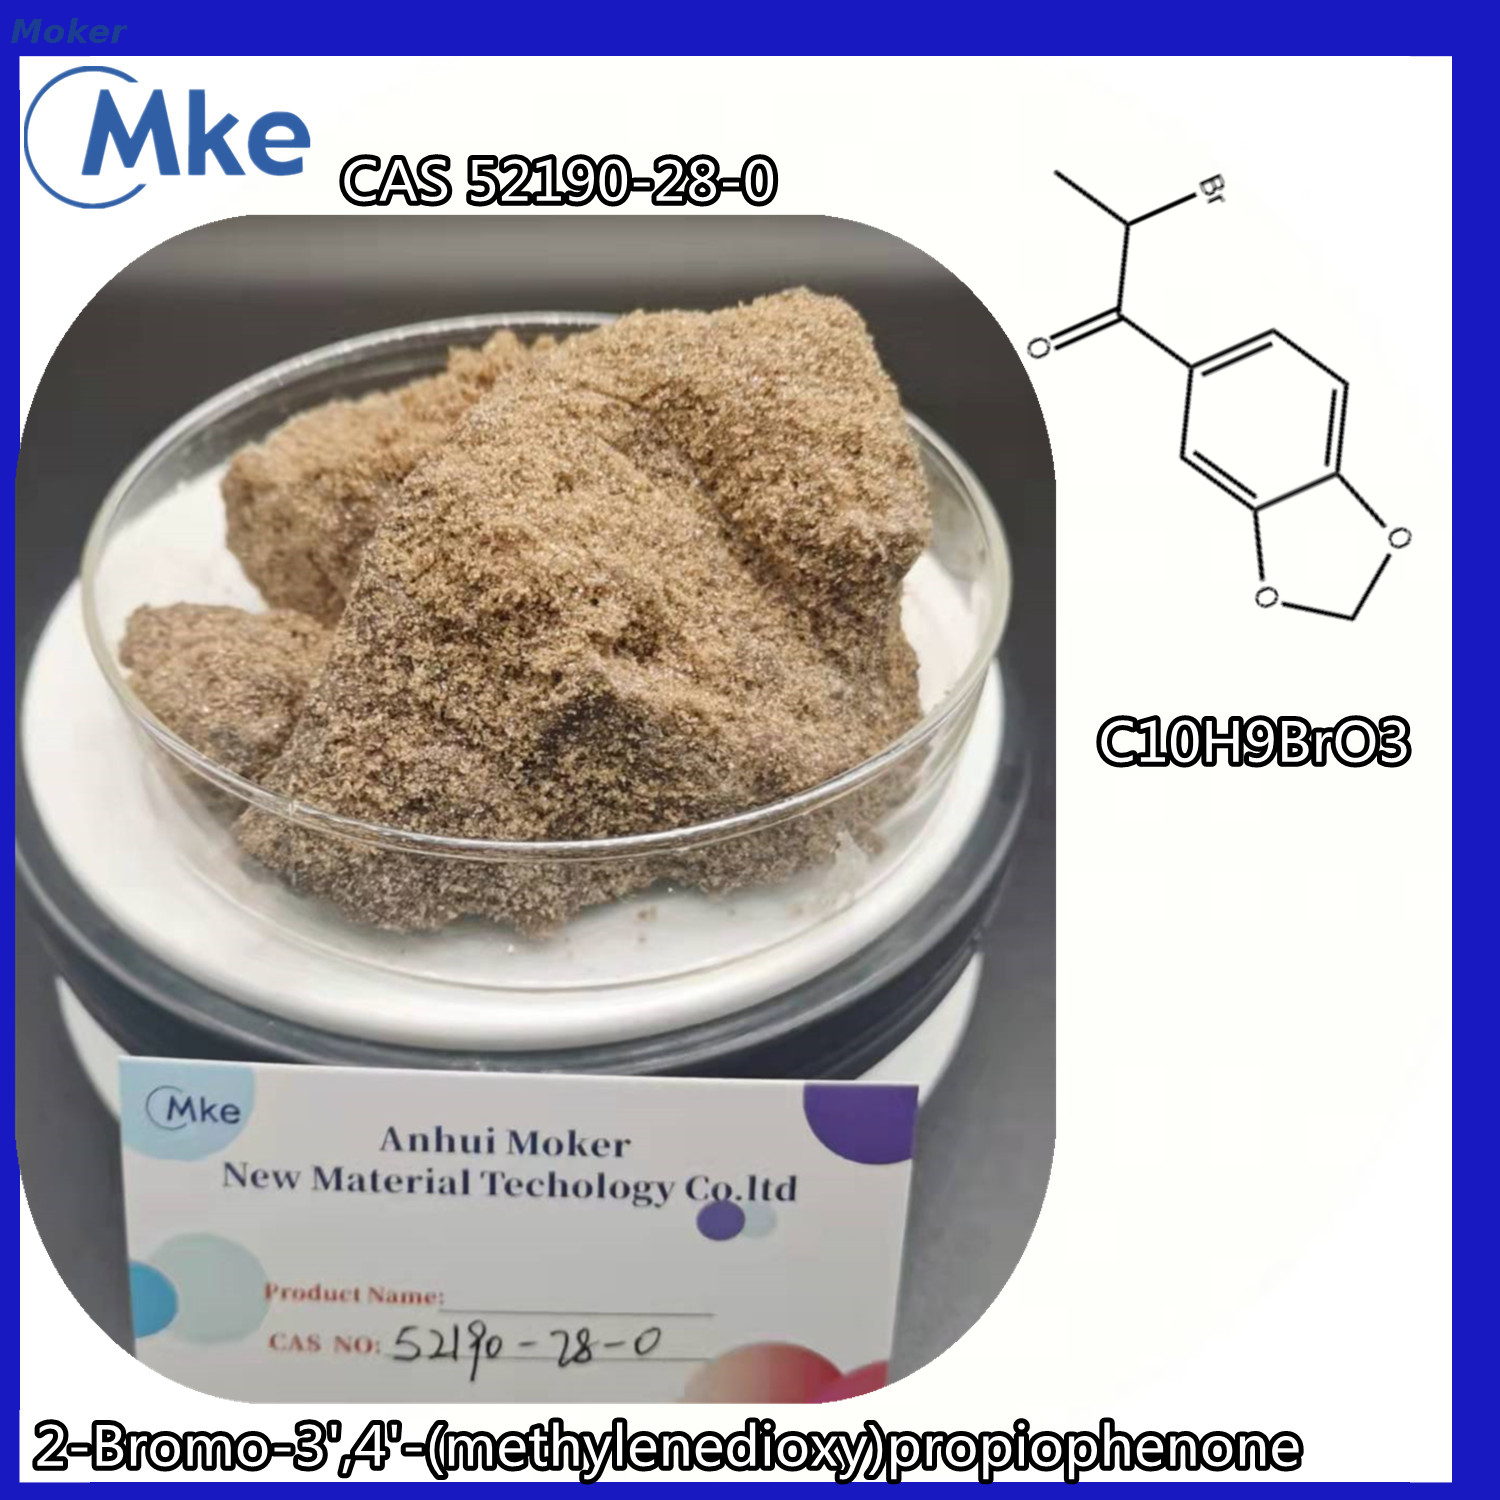 Best Quality C10h9bro3 CAS 52190-28-0 2-Bromo-3', 4'- (methylenedioxy) Propiophenone Crysal Powder 